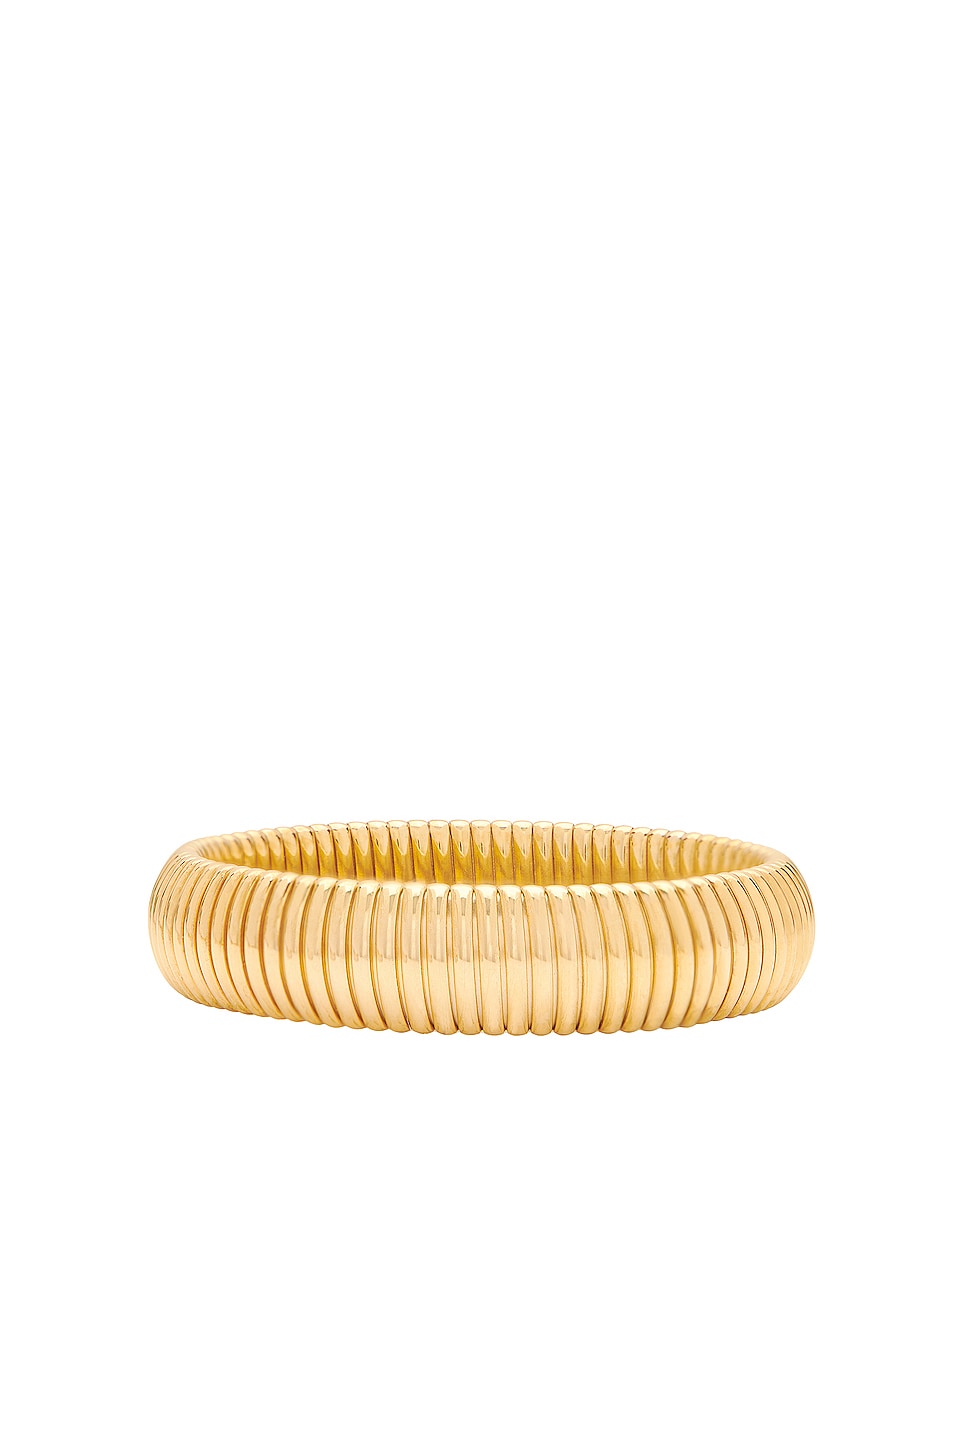 Image 1 of MEGA Round Cobra Bracelet in 14k Yellow Gold Plated